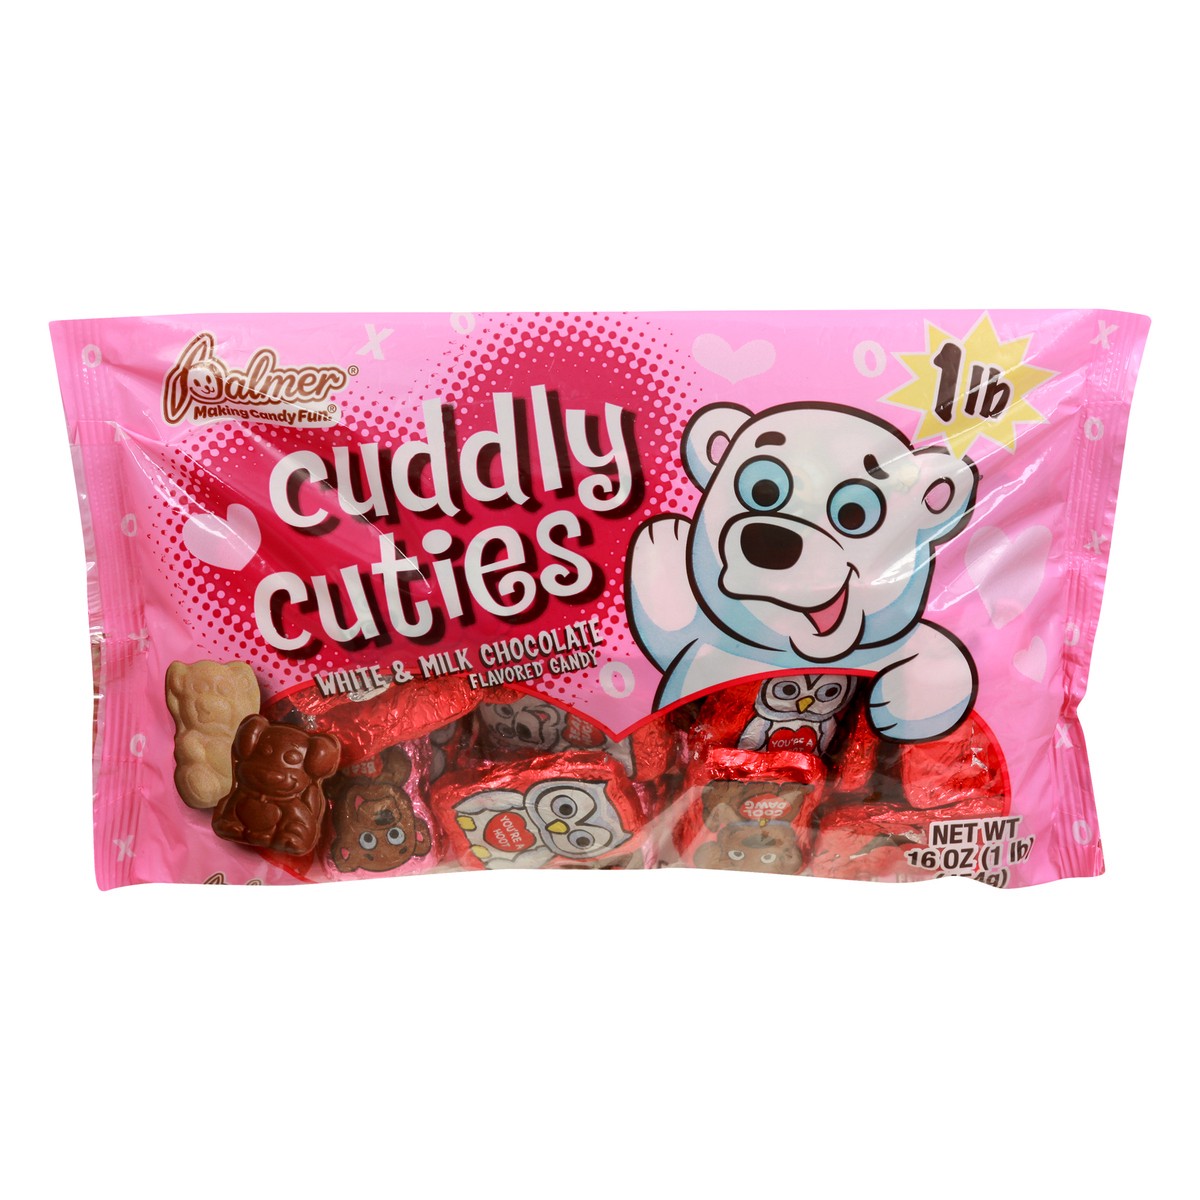 slide 7 of 12, Palmer Cuddly Cuties White & Milk Chocolate Candy 16 oz, 16 oz